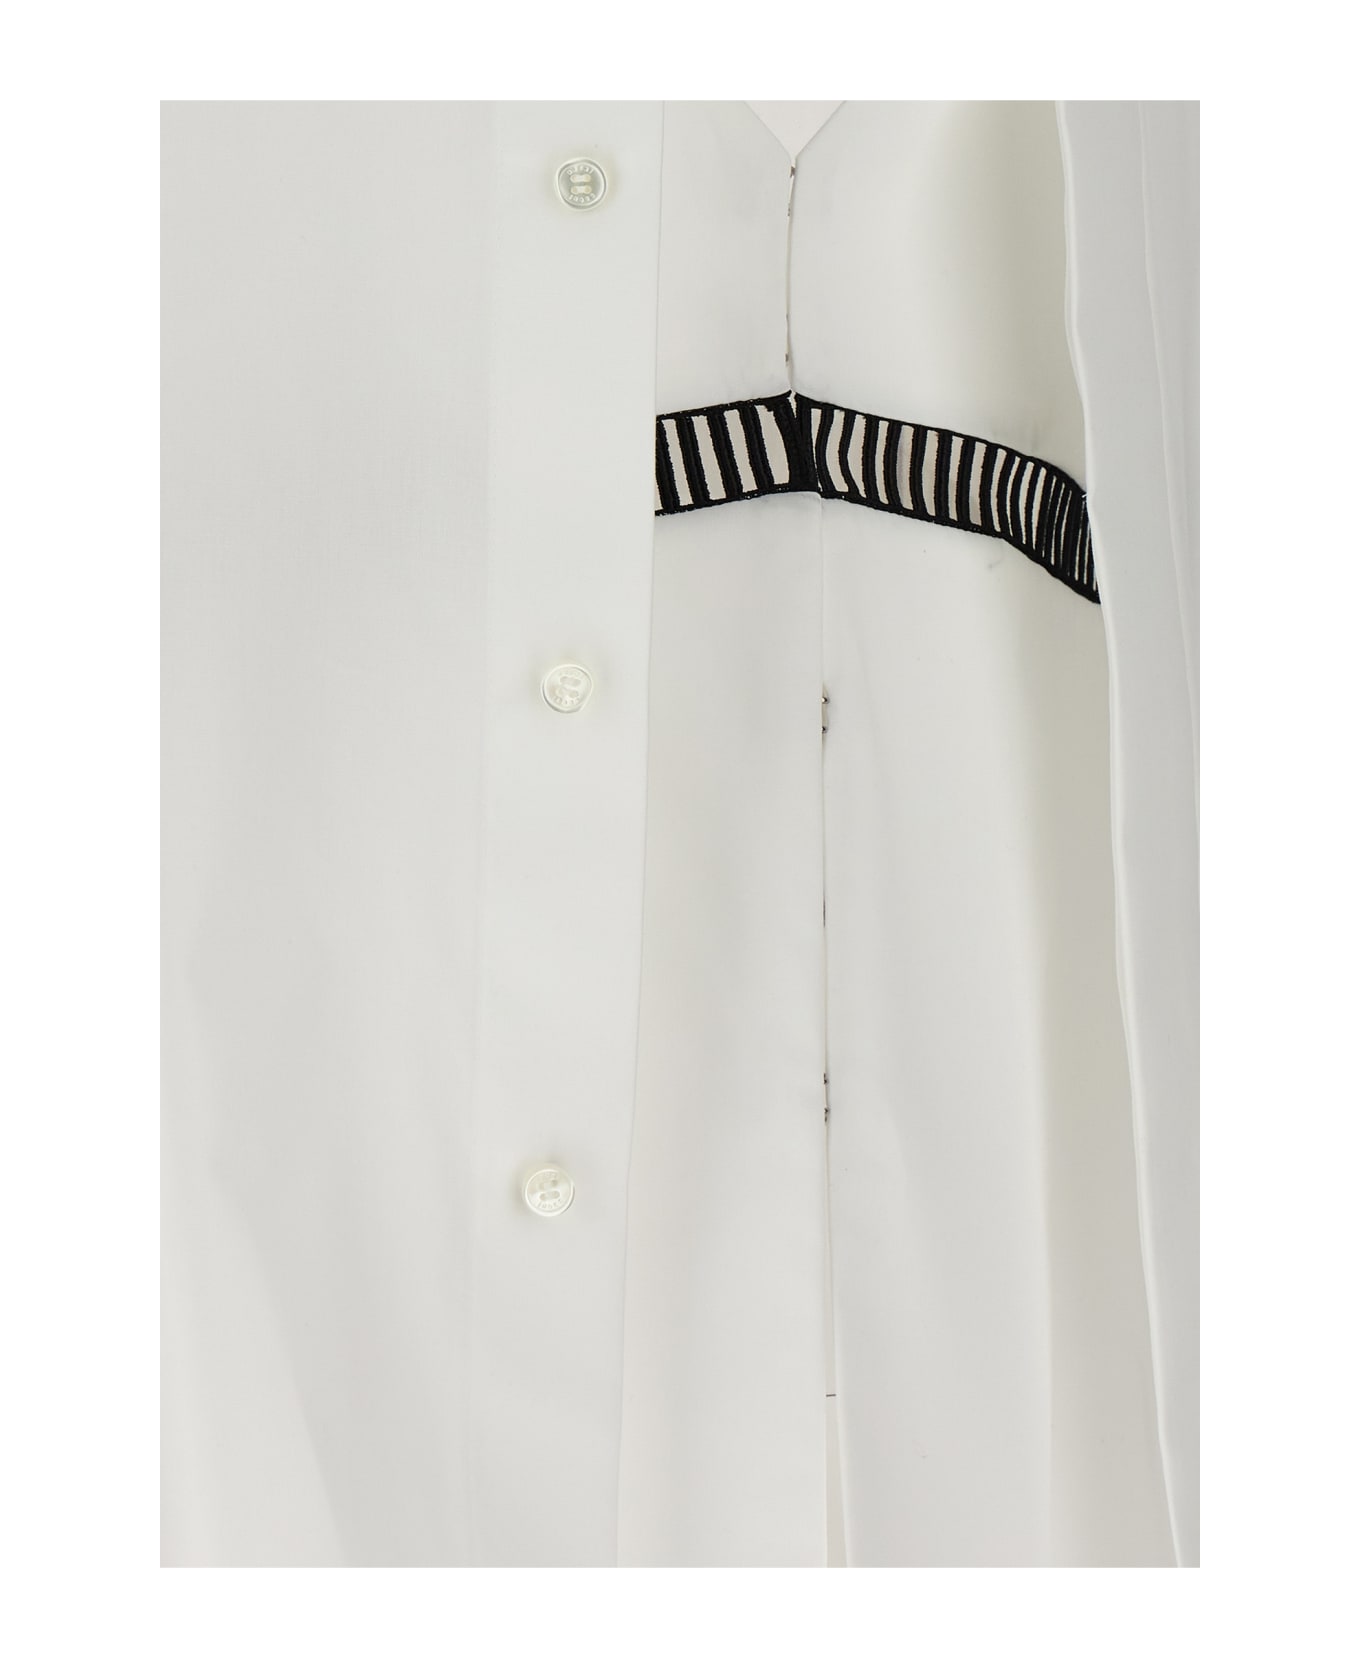 Sacai Overlay Shirt - White シャツ